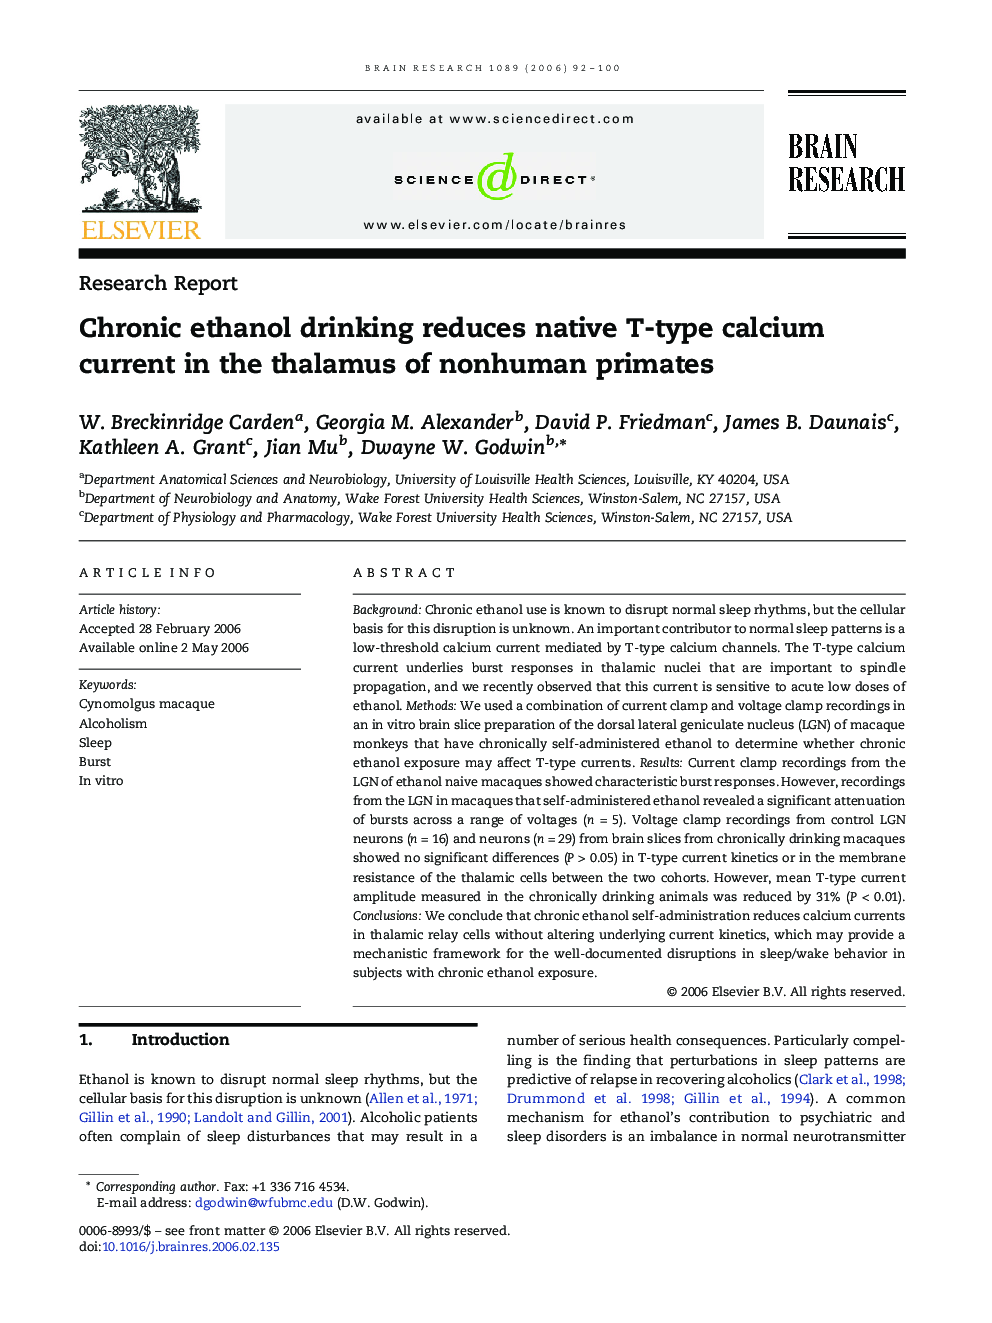 Chronic ethanol drinking reduces native T-type calcium current in the thalamus of nonhuman primates